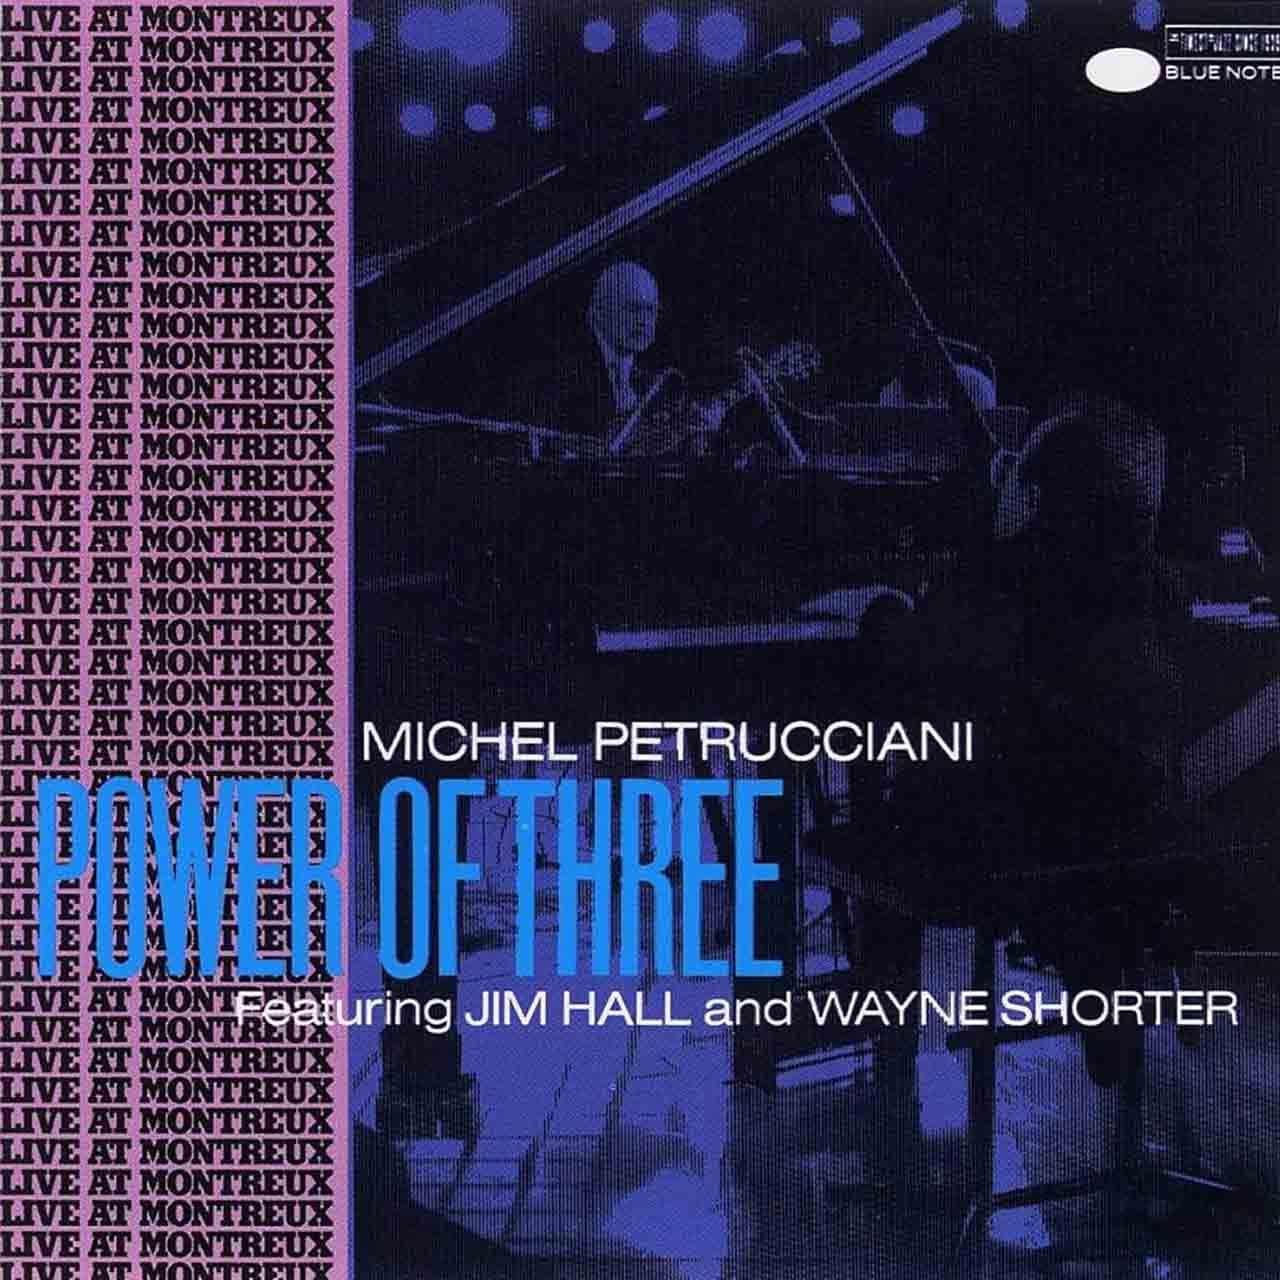 ‘Power of Three’: Michel Petrucciani’s Masterful Montreux Live Set